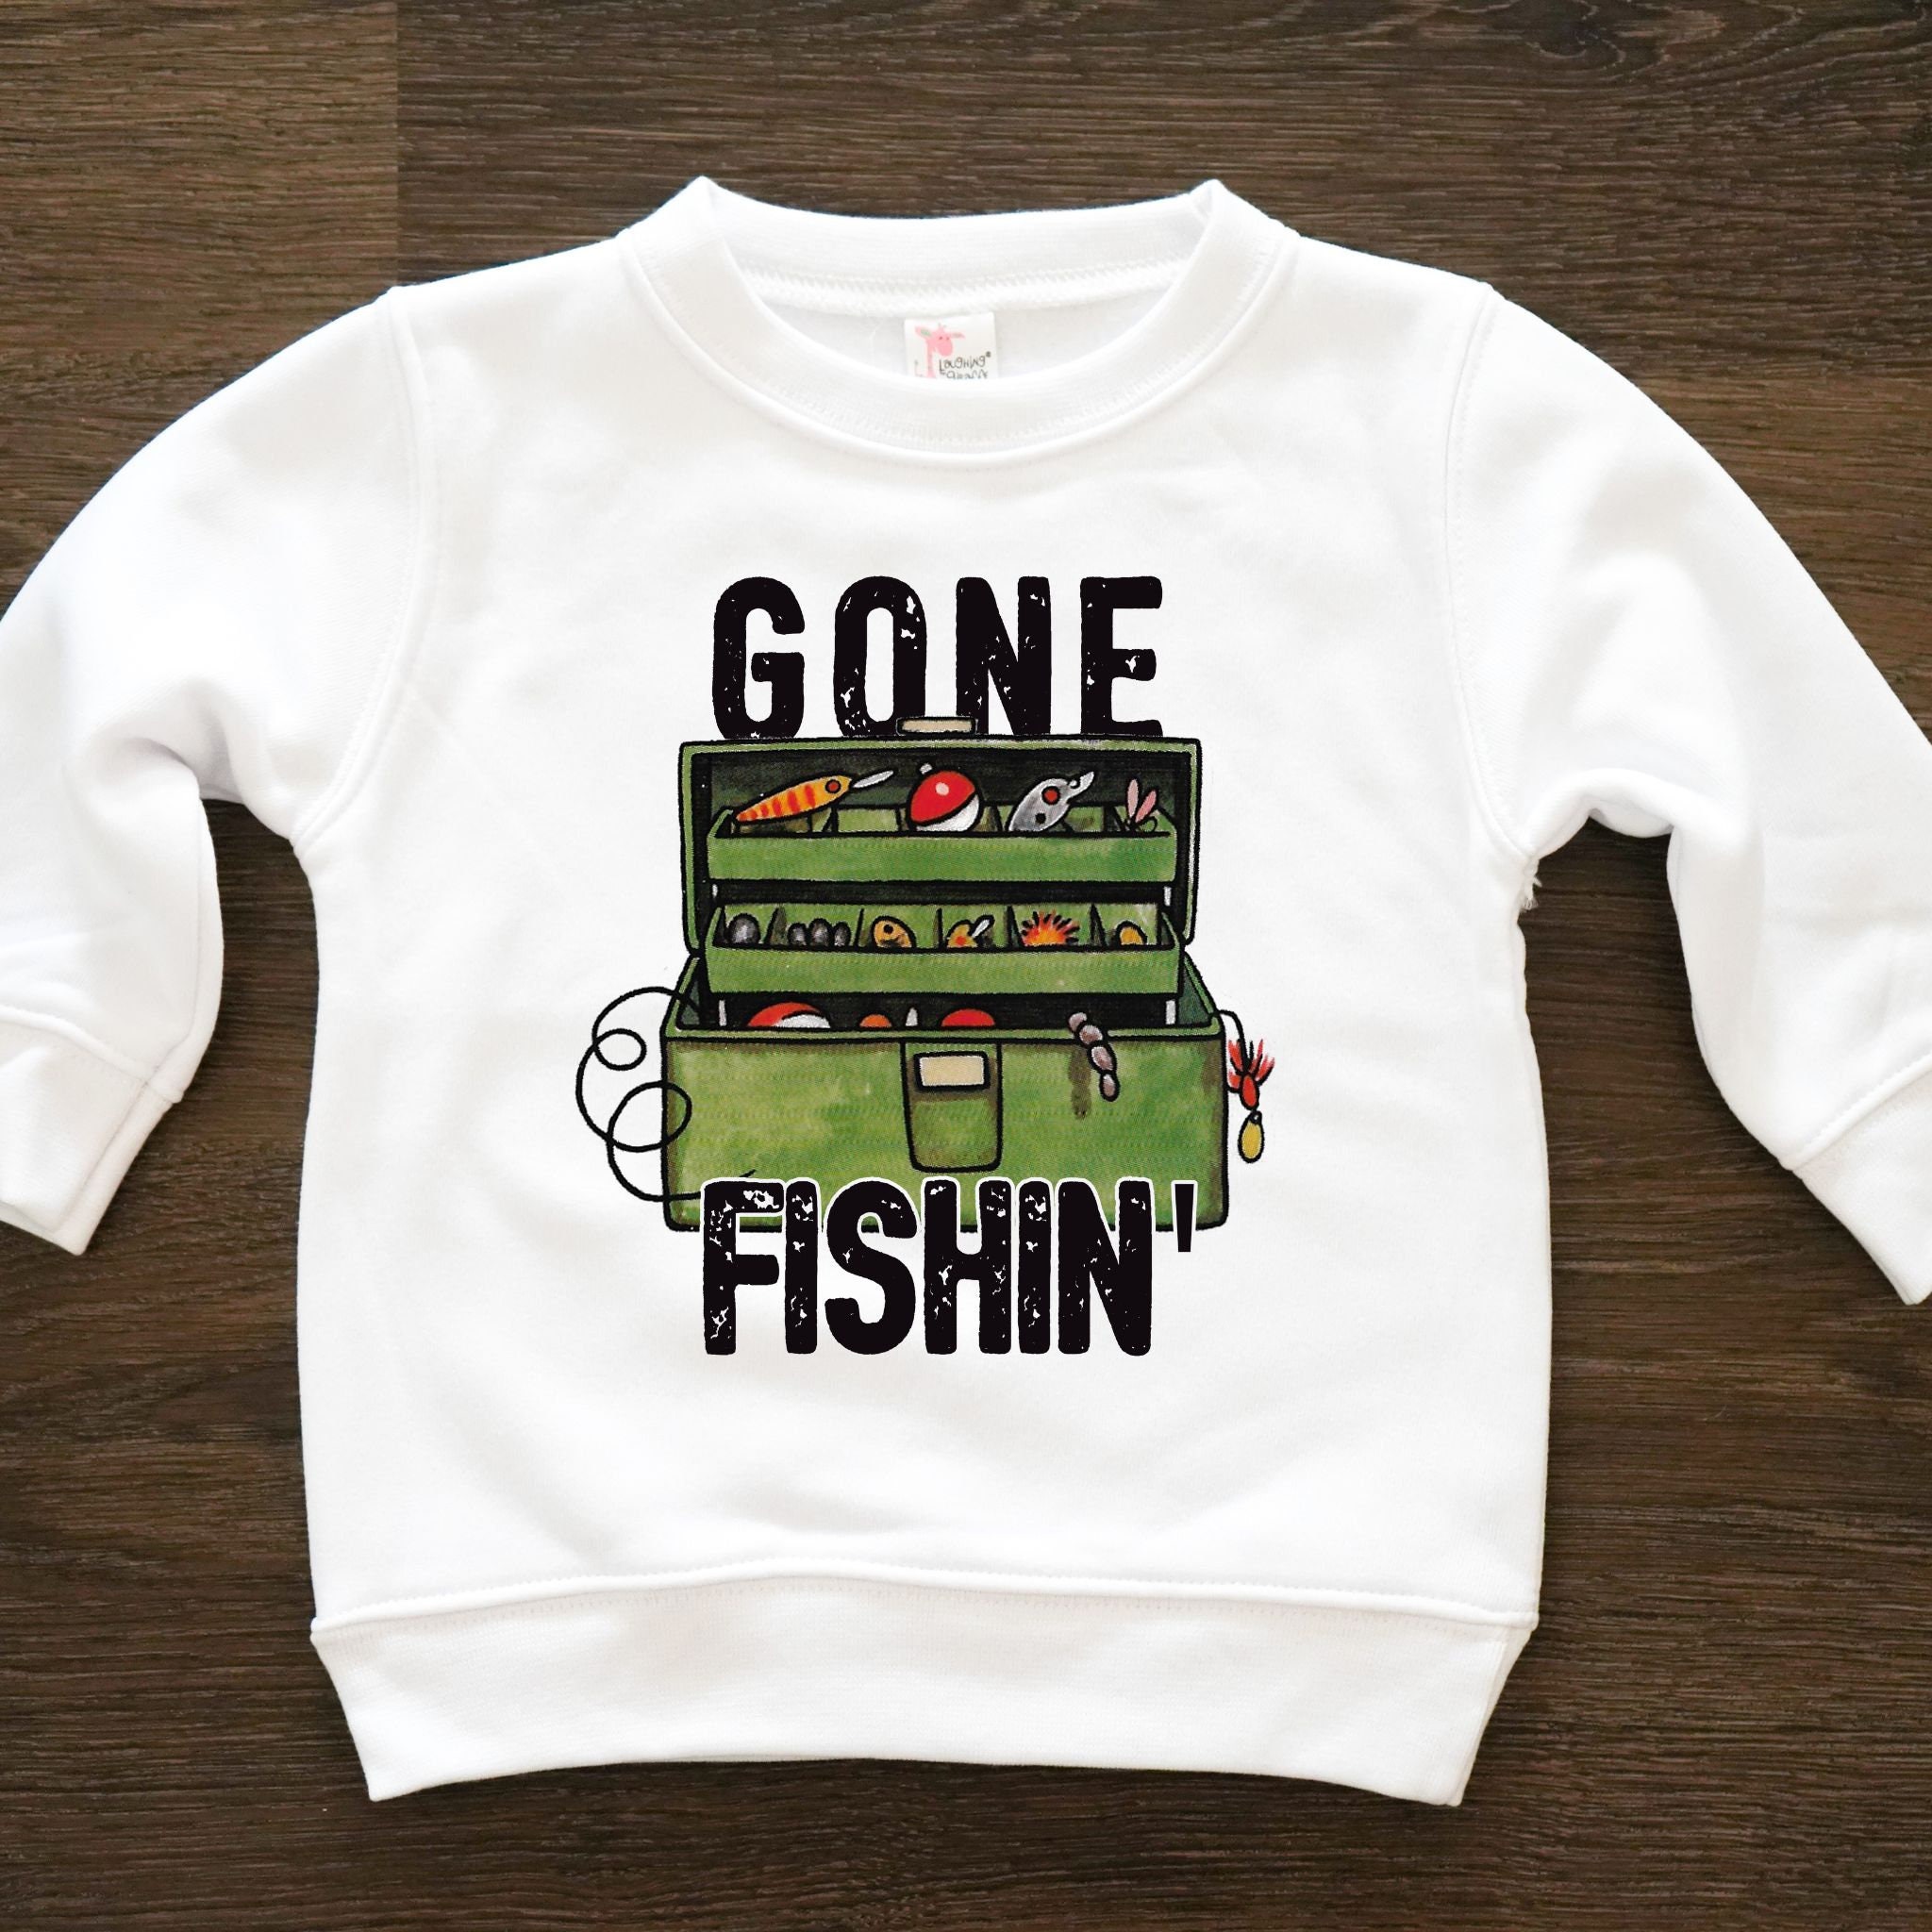 Let's Go Fishing Fish Alphabet Shirt for Kids, Kids Fishing ABC